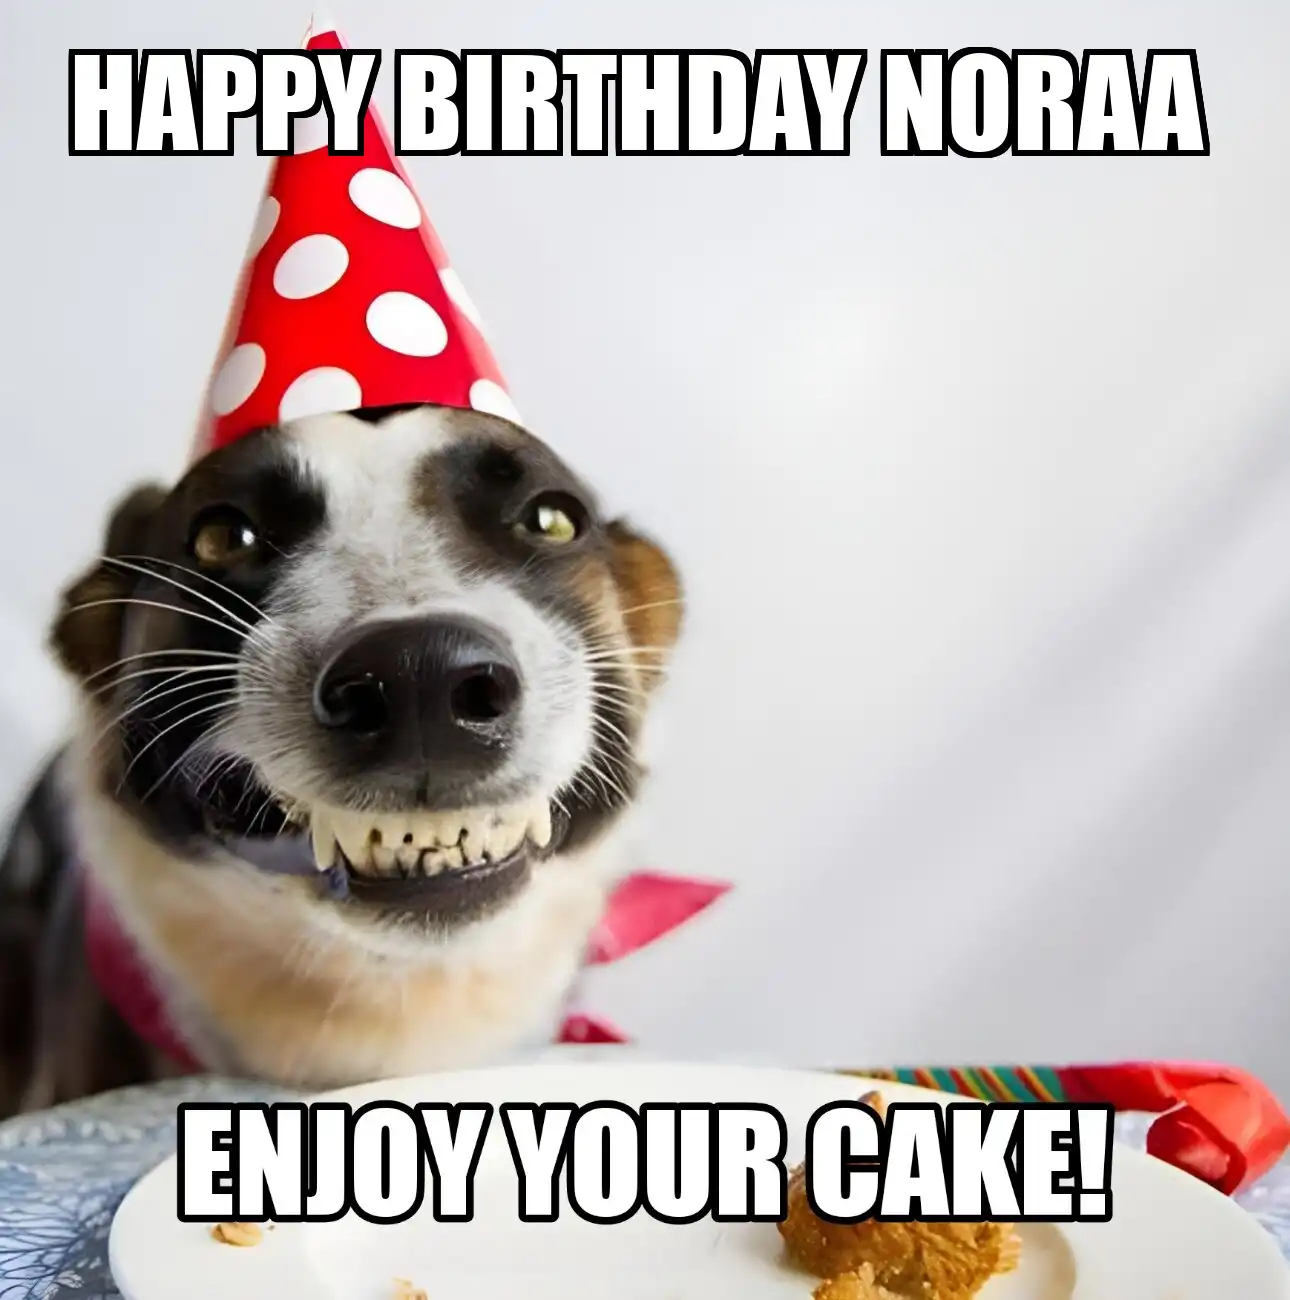 Happy Birthday Noraa Enjoy Your Cake Dog Meme